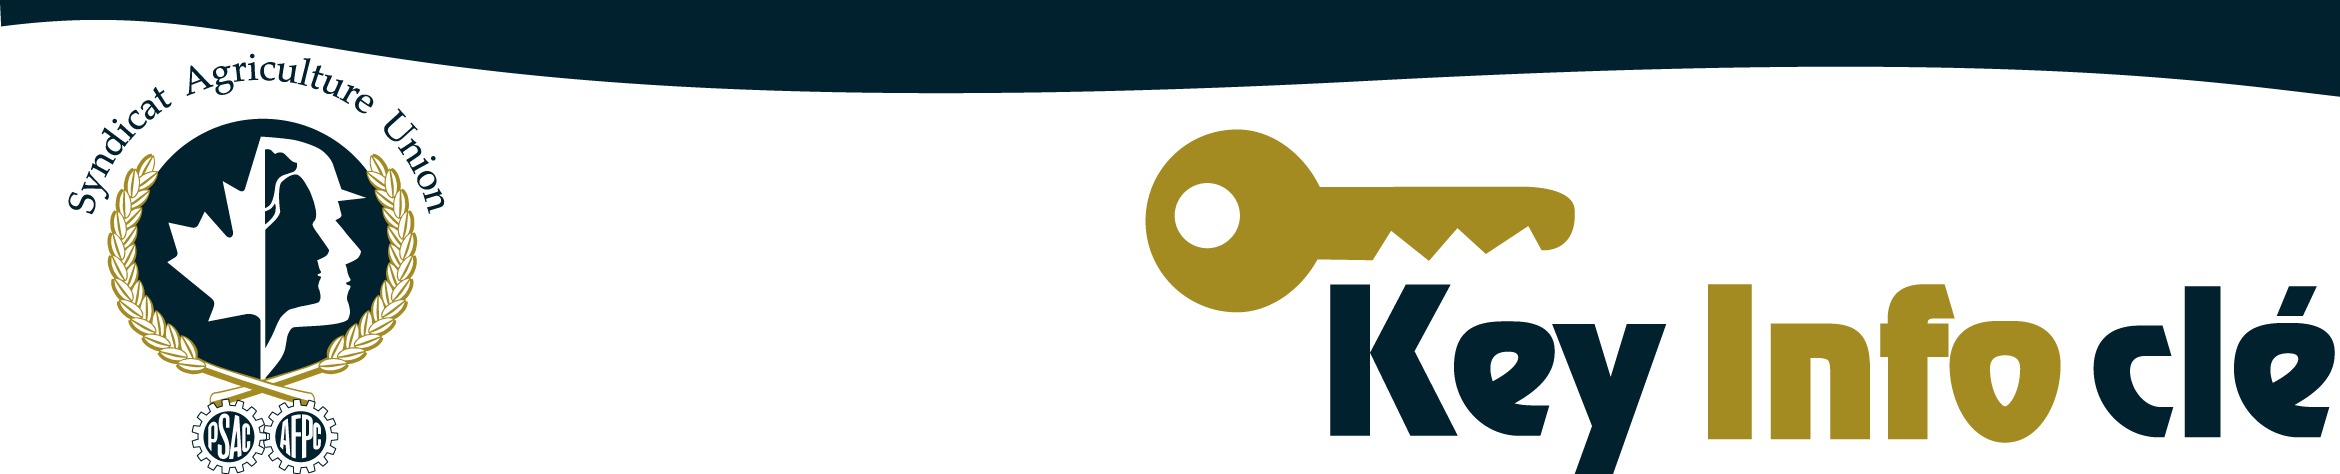 'KeyInfo' logo